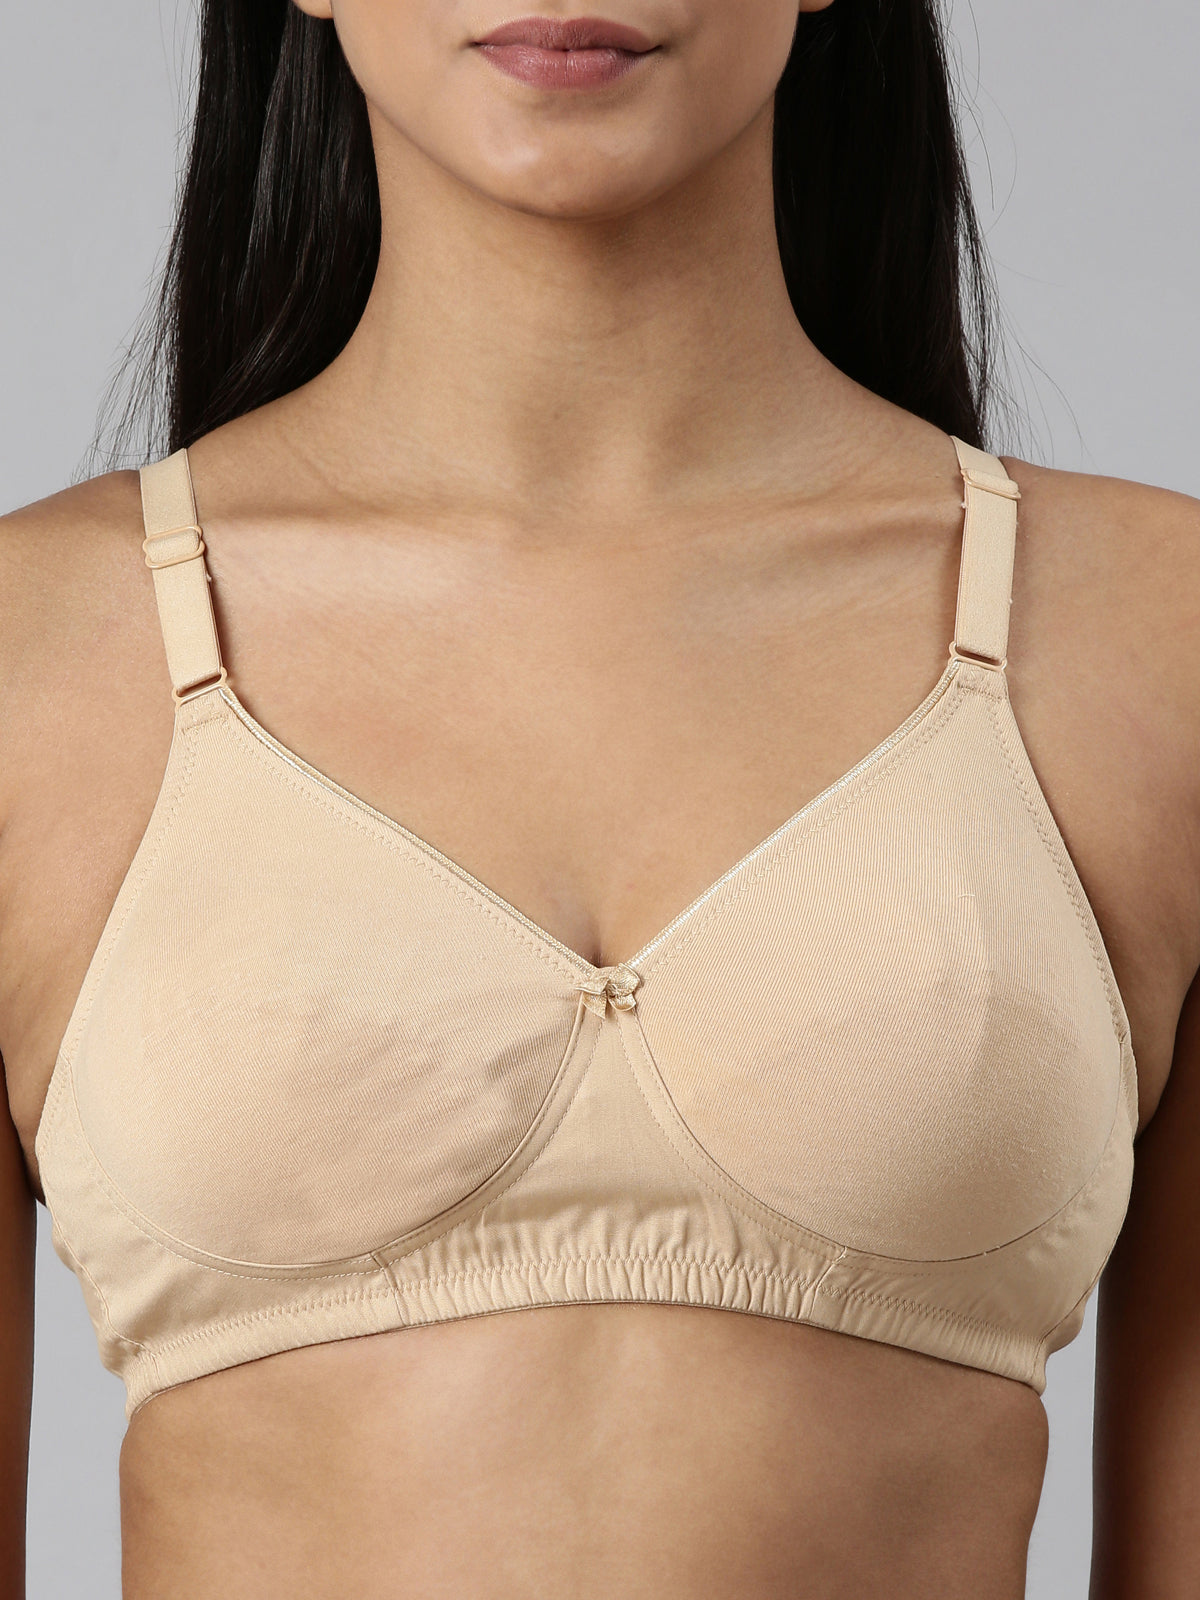 blossom-ethnic bra-skin2-woven cotton-everyday bra